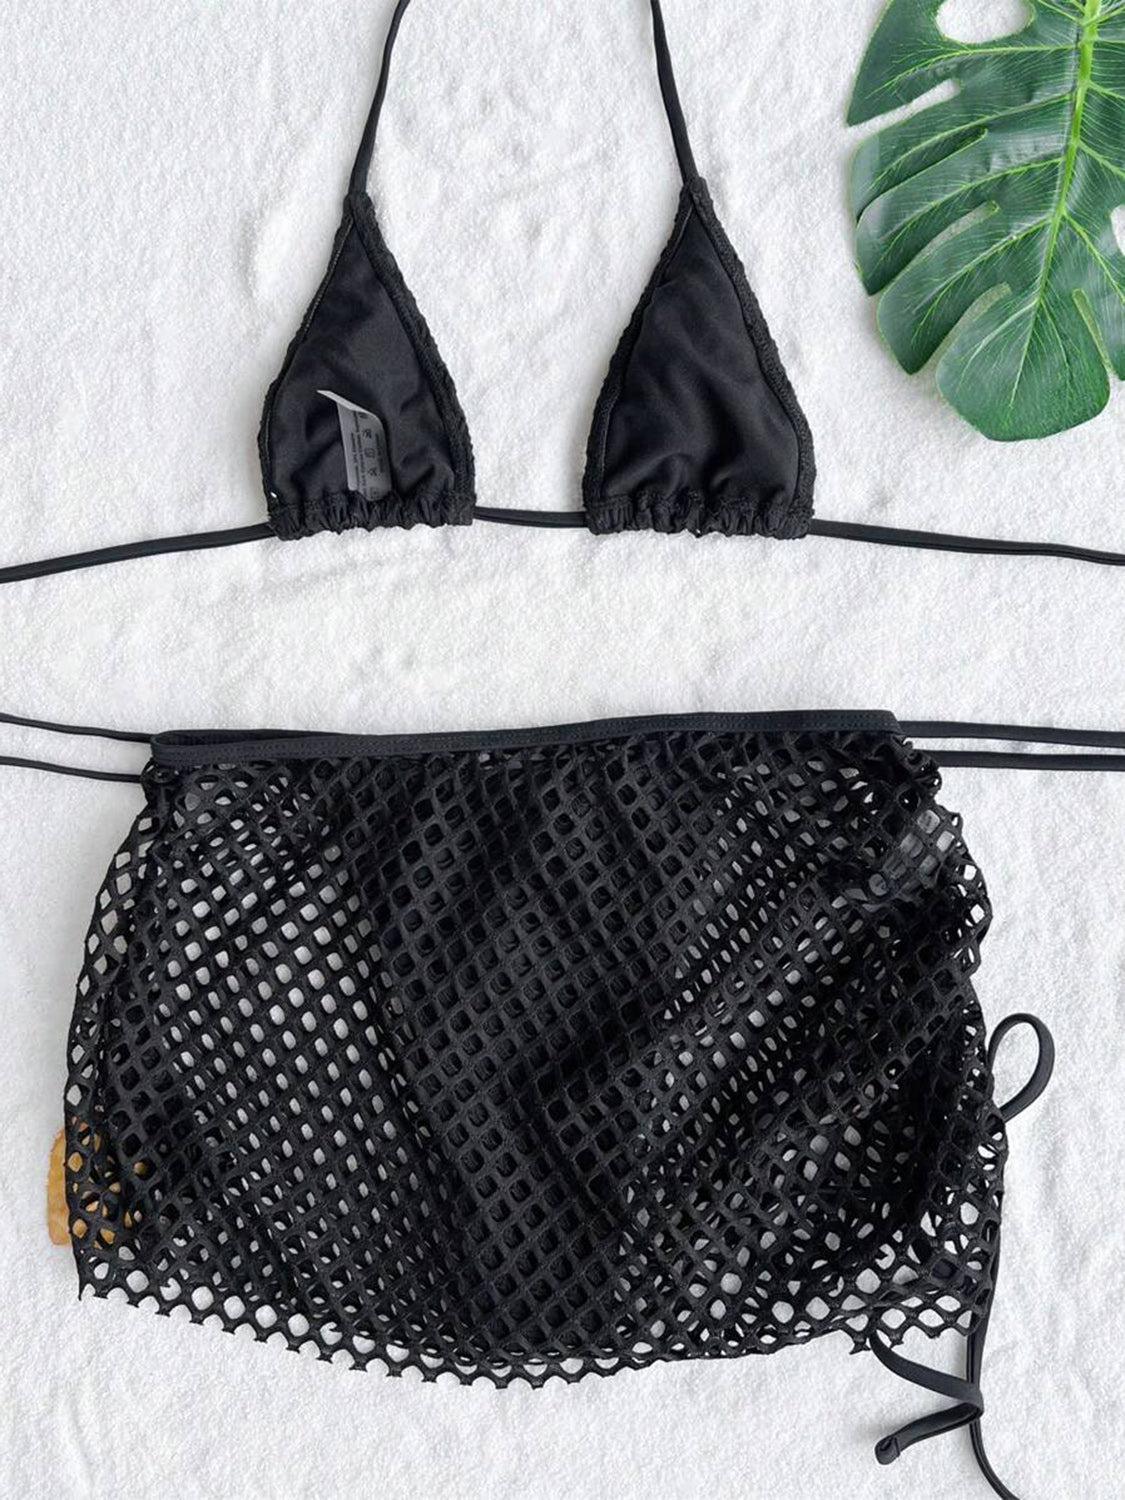 a black bikini top and a black net bag